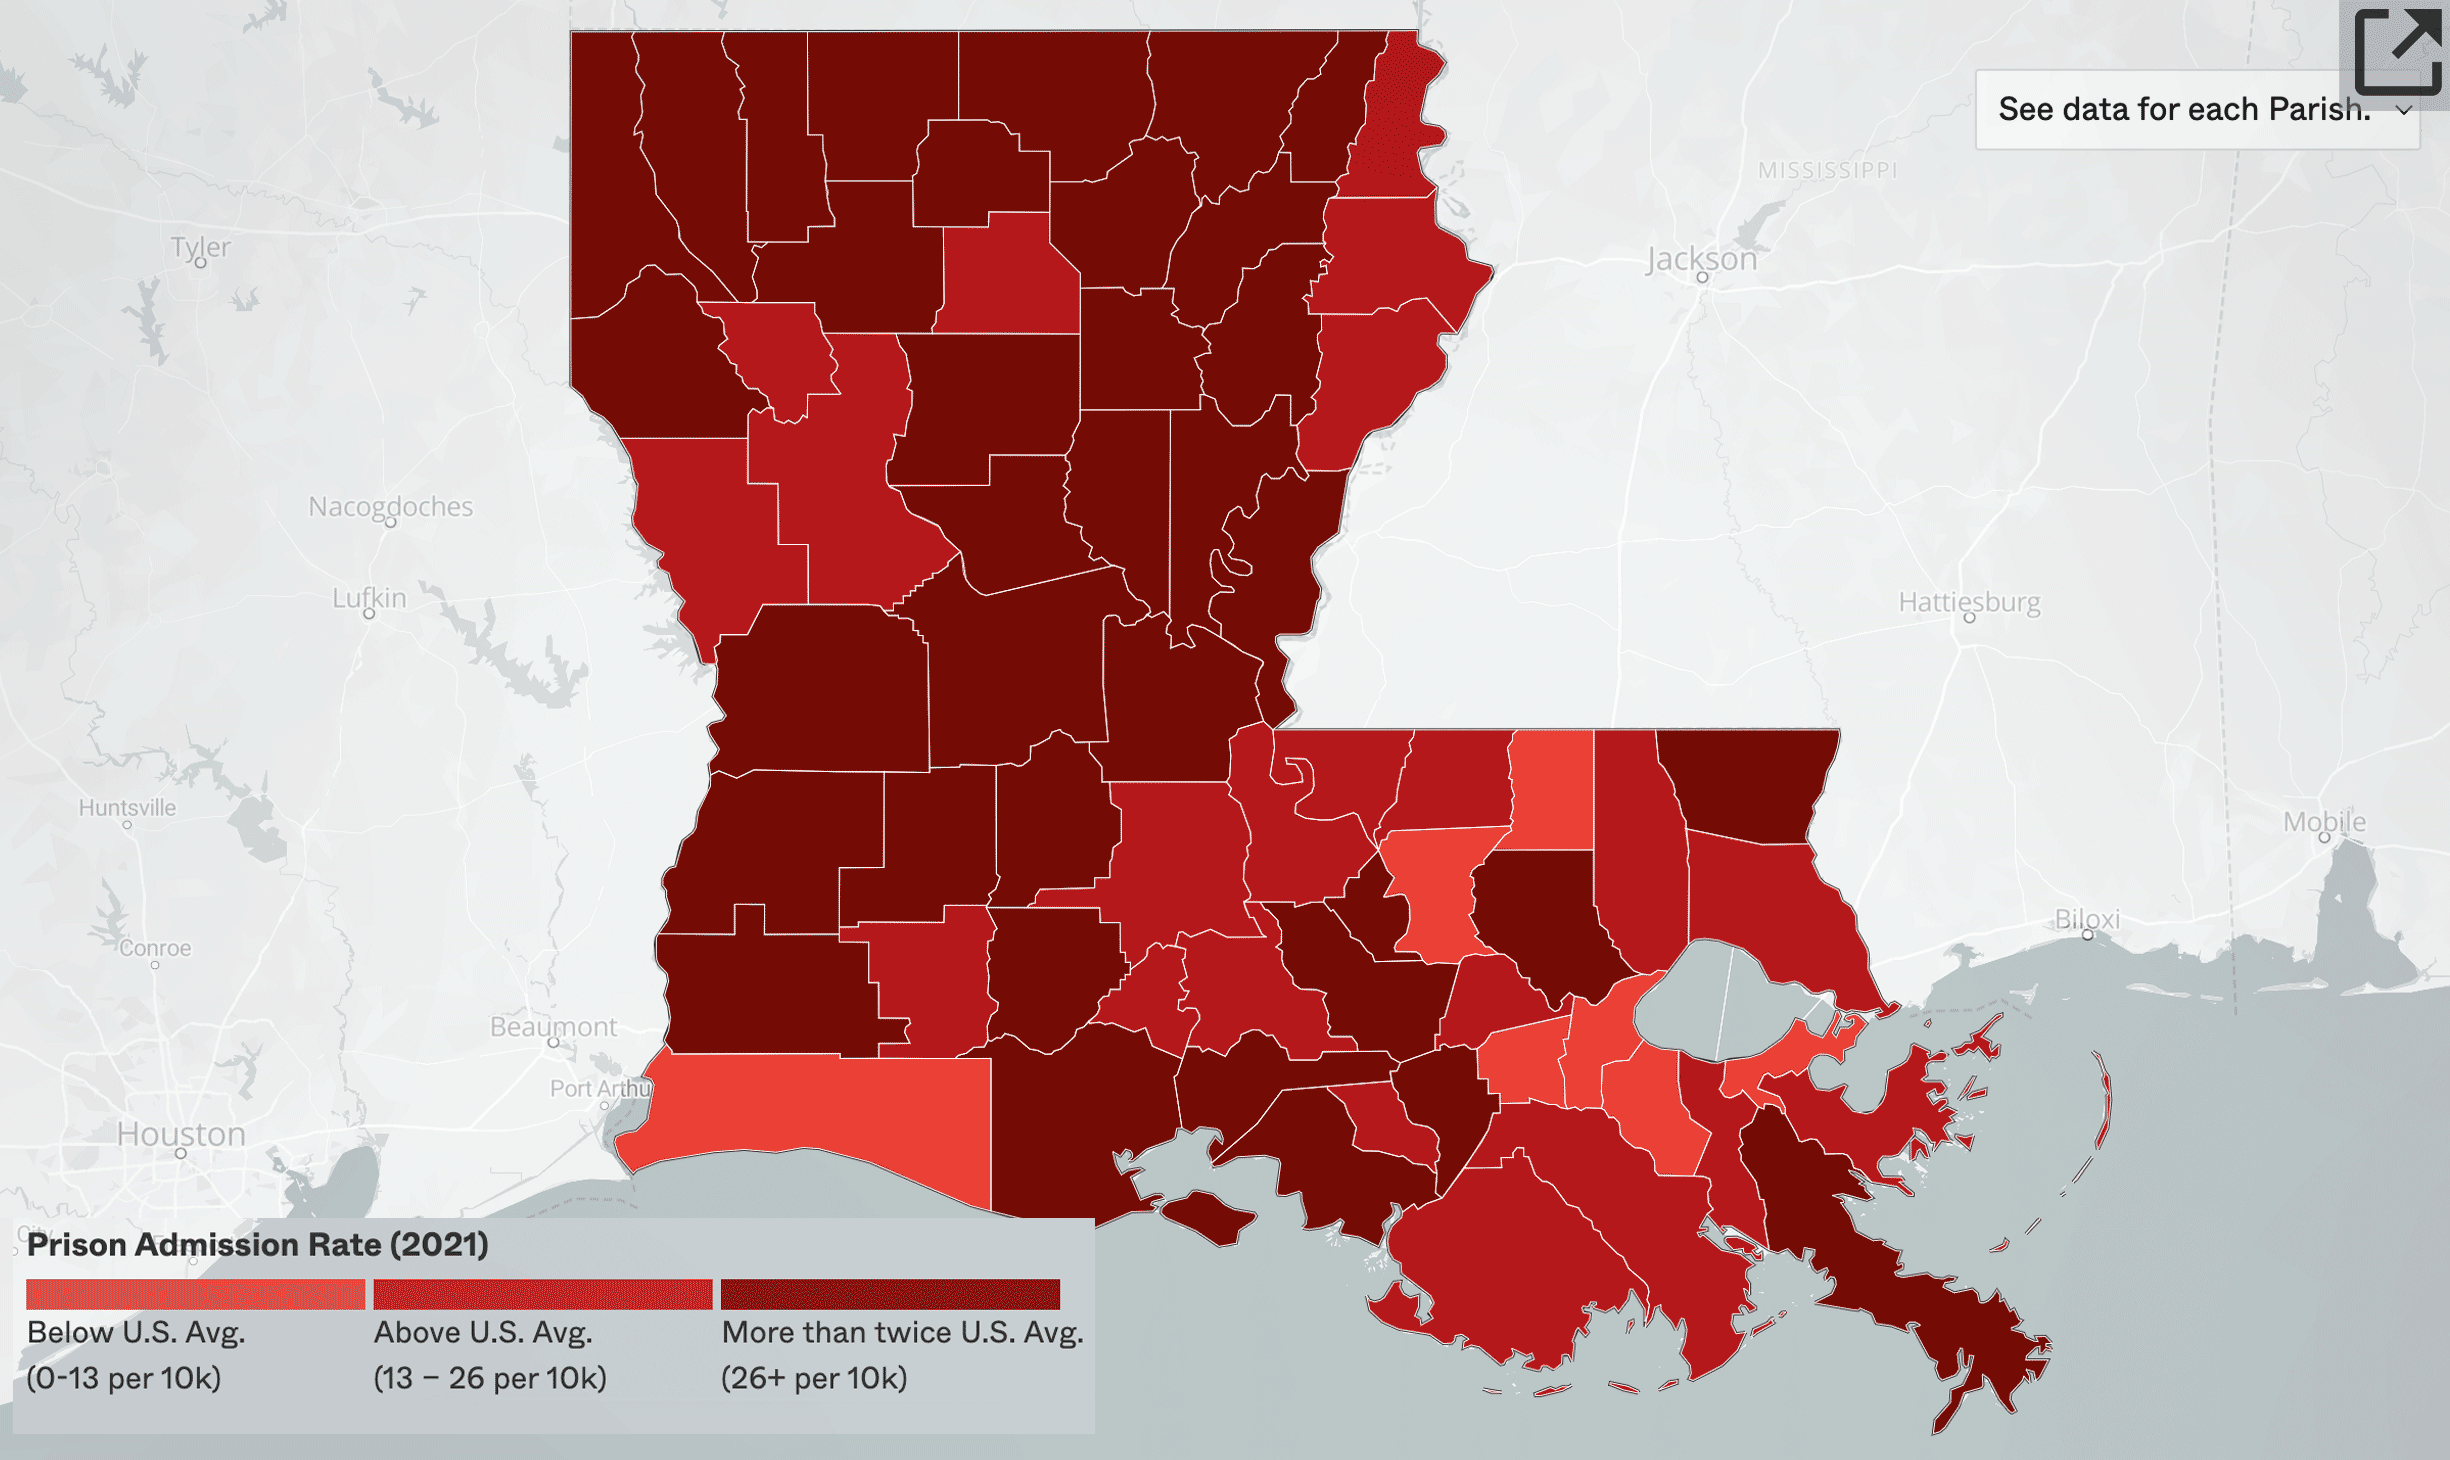 New Data Hubs Show Local Impact of Mass Incarceration in California and Louisiana